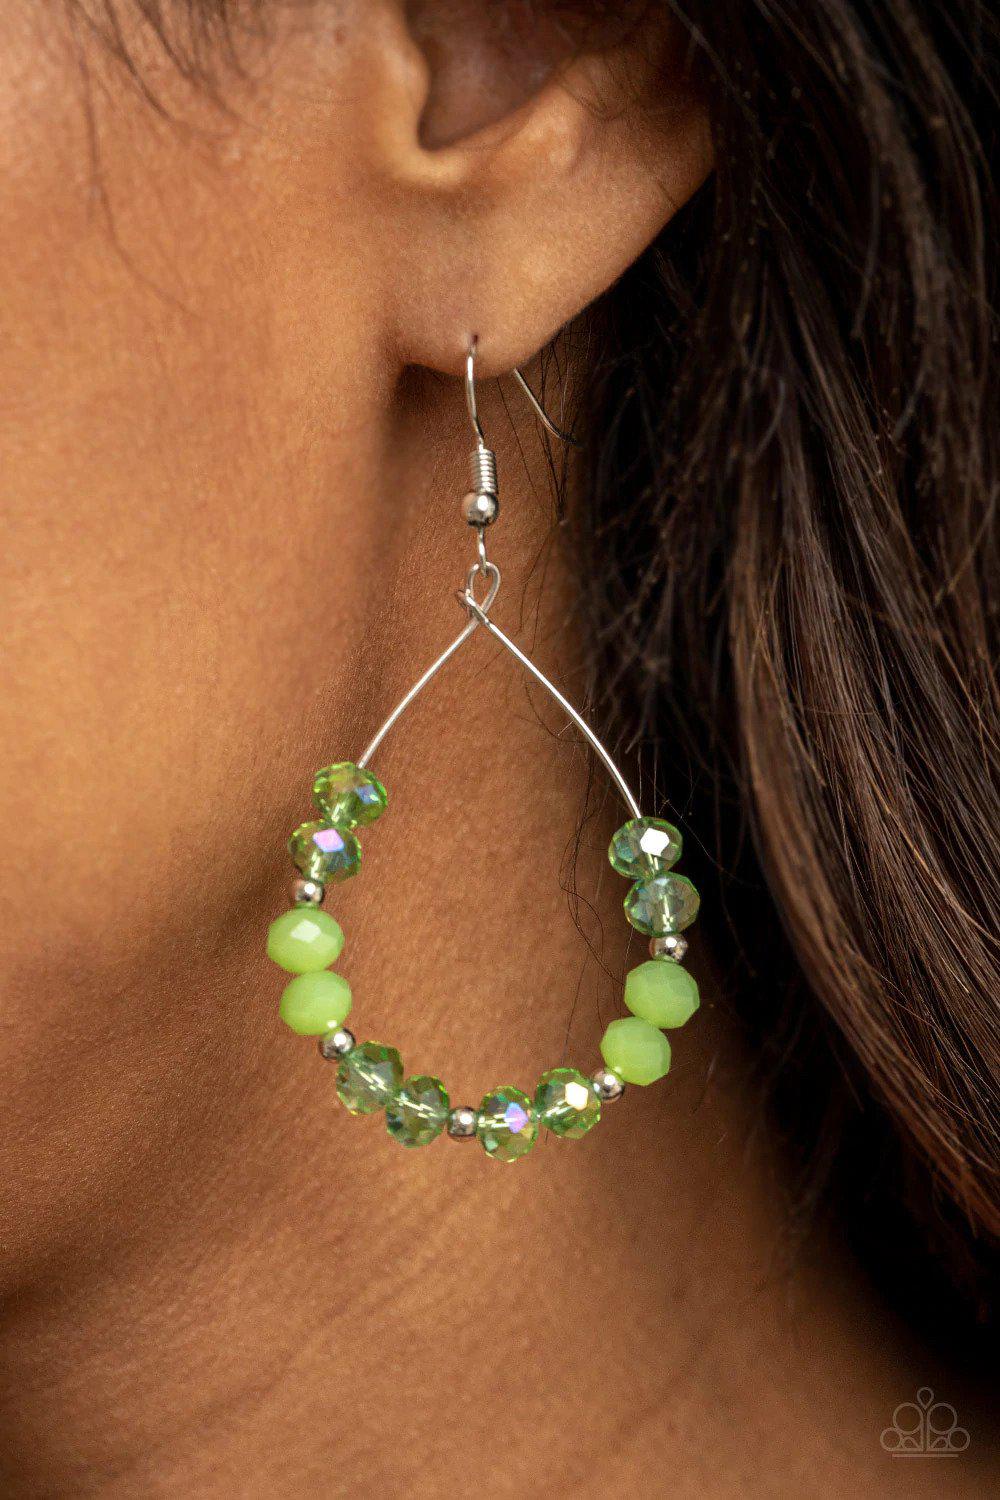 Wink Wink Green Earrings - Paparazzi Accessories- on model - CarasShop.com - $5 Jewelry by Cara Jewels